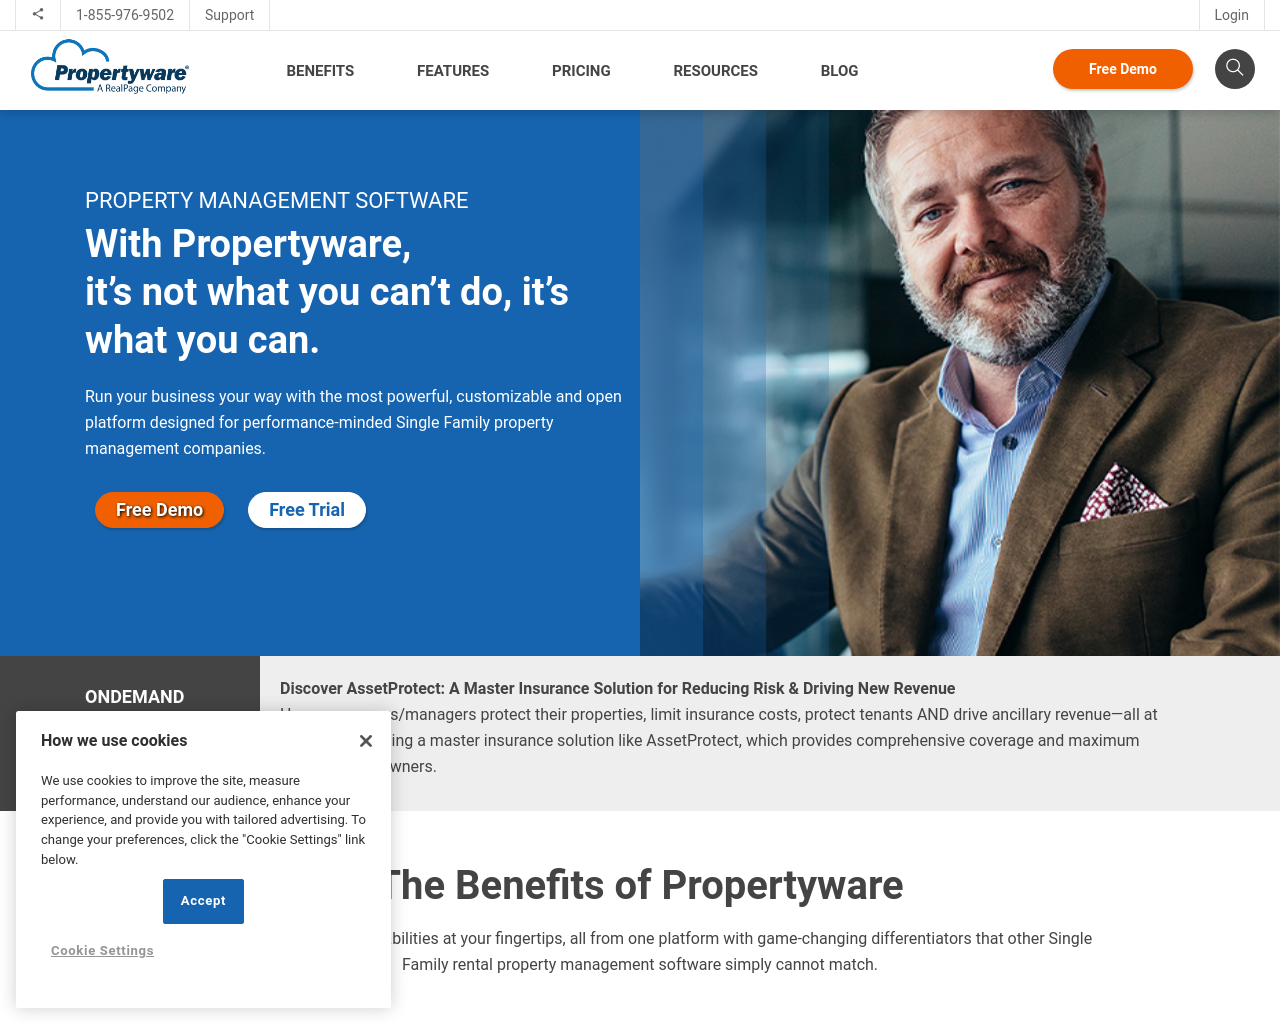 propertyware.com